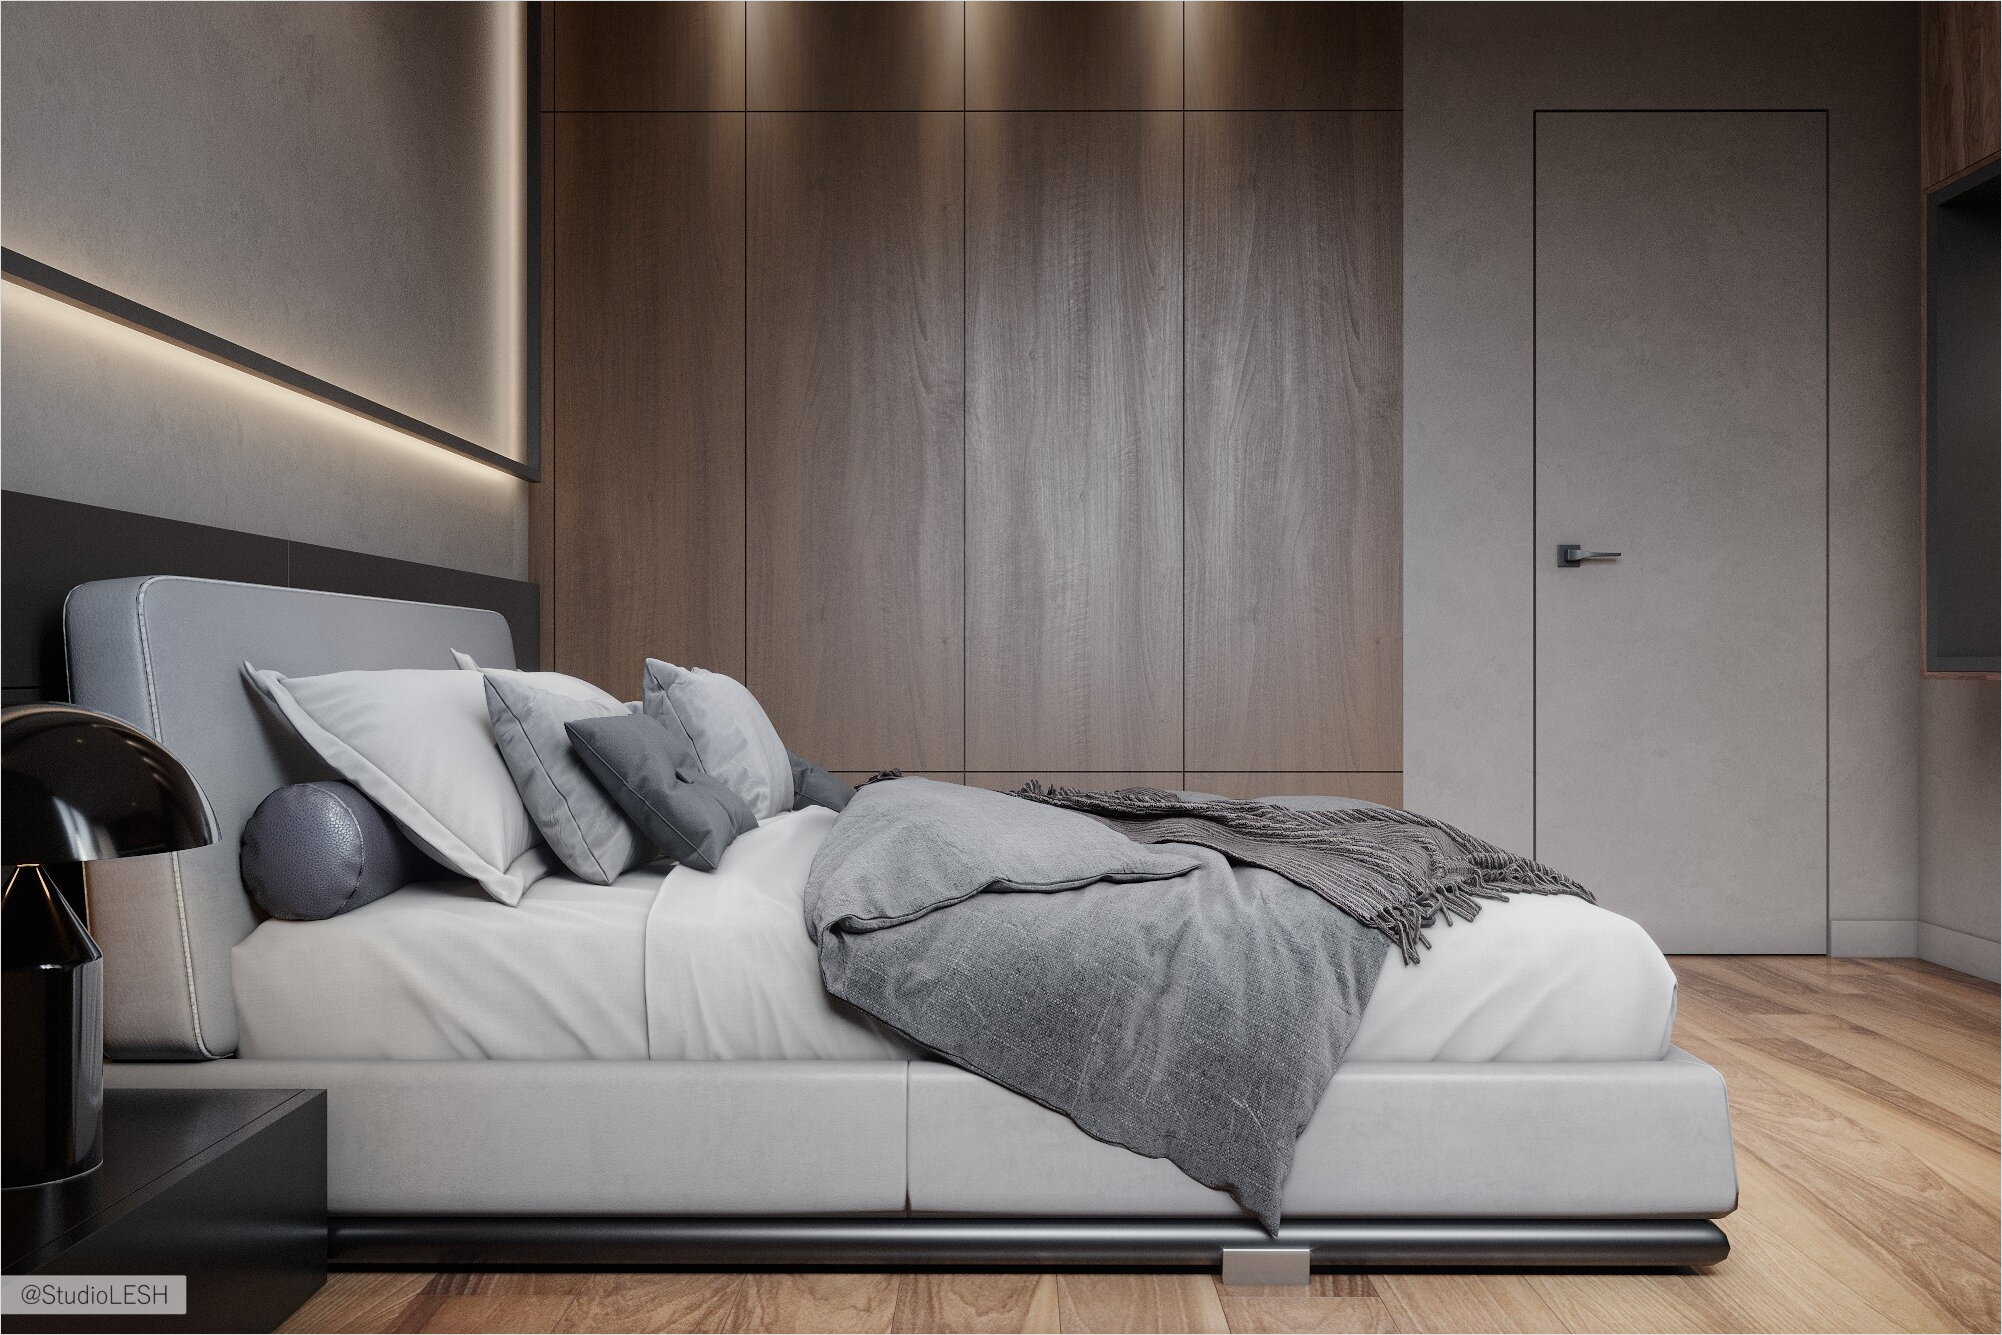 Bedroom in a modern stylistics